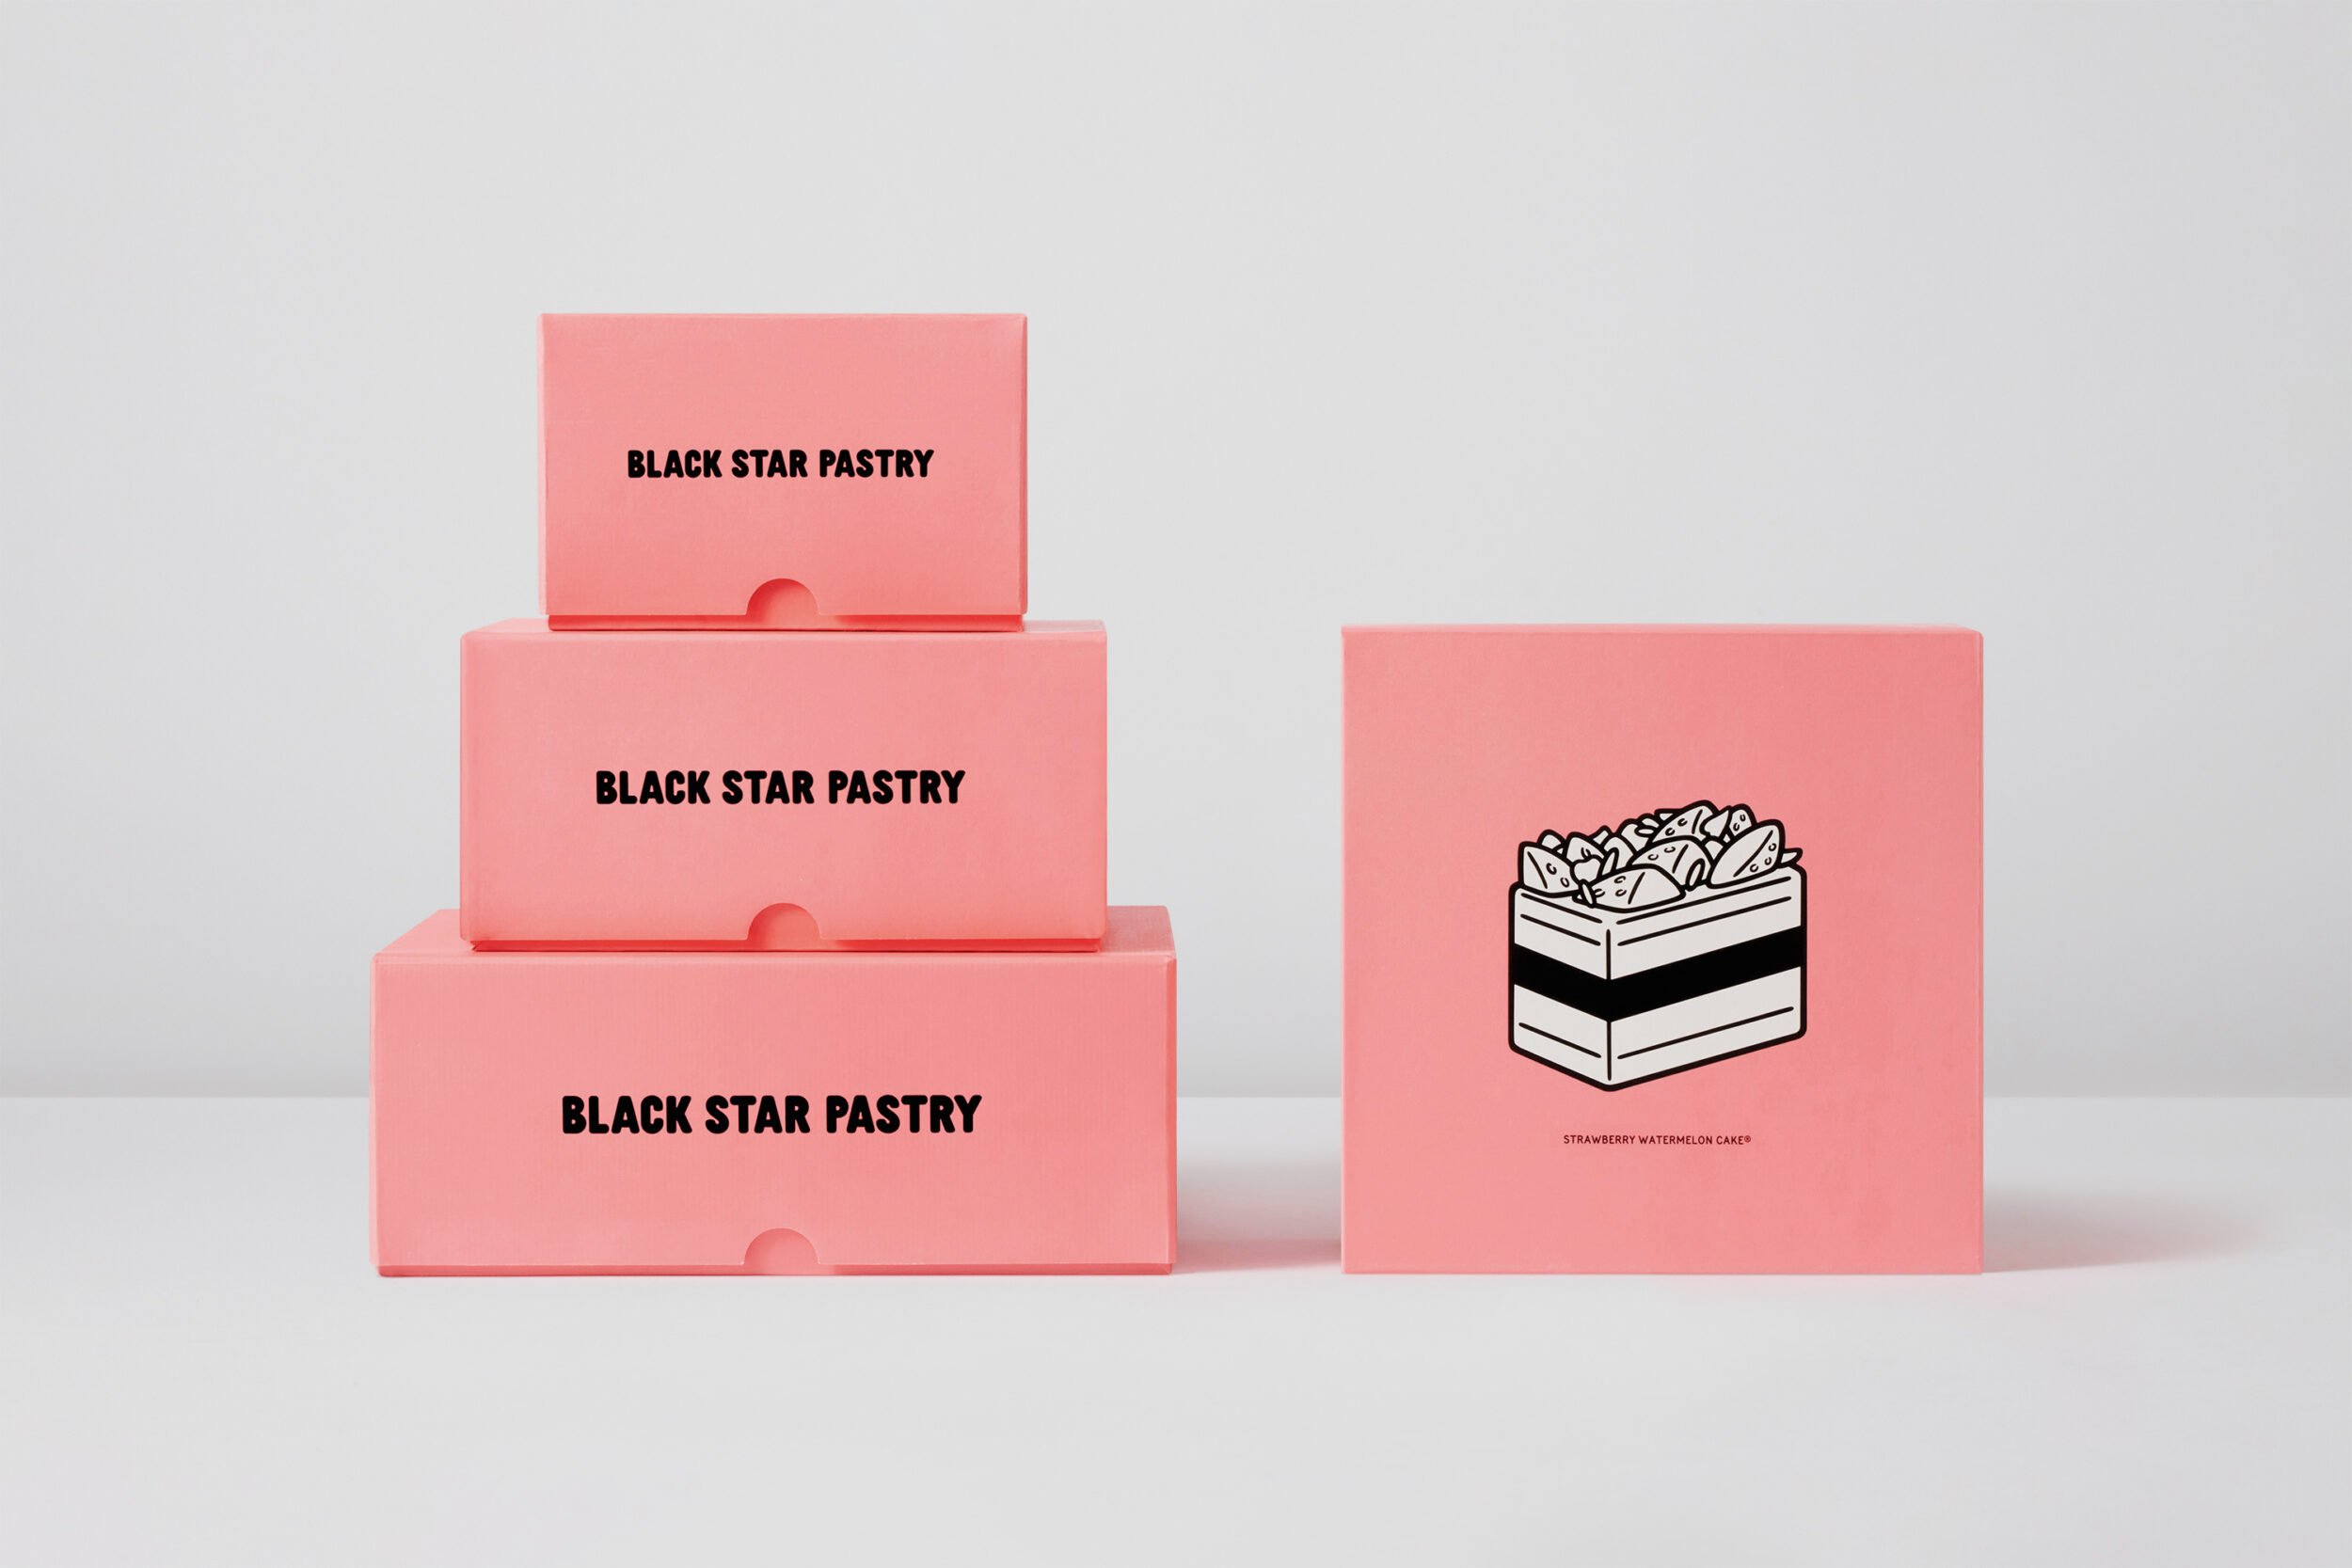 Logo, illustration and packaging for Australian bakery Black Star Pastry designed by Studio Ongarato